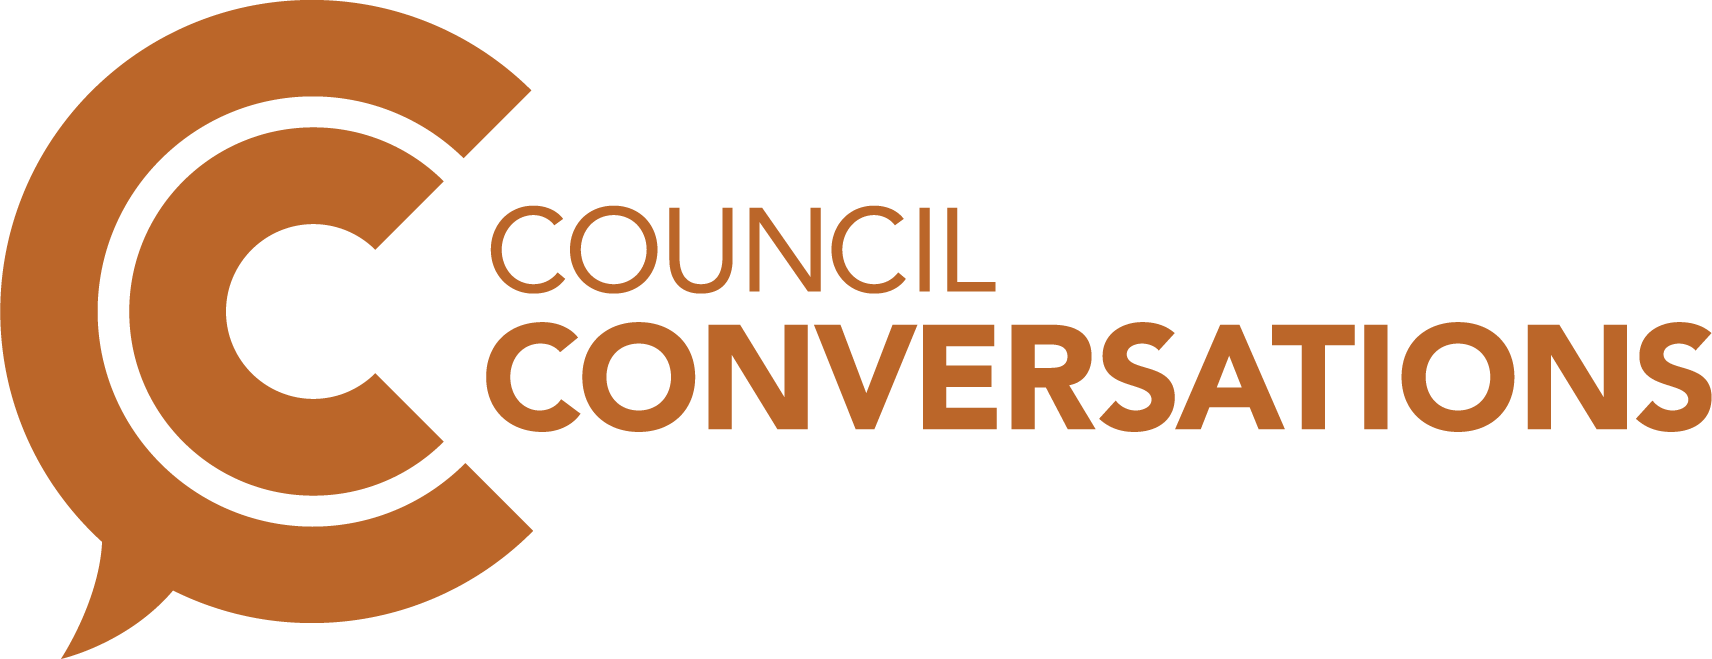 Council Conversations Logo